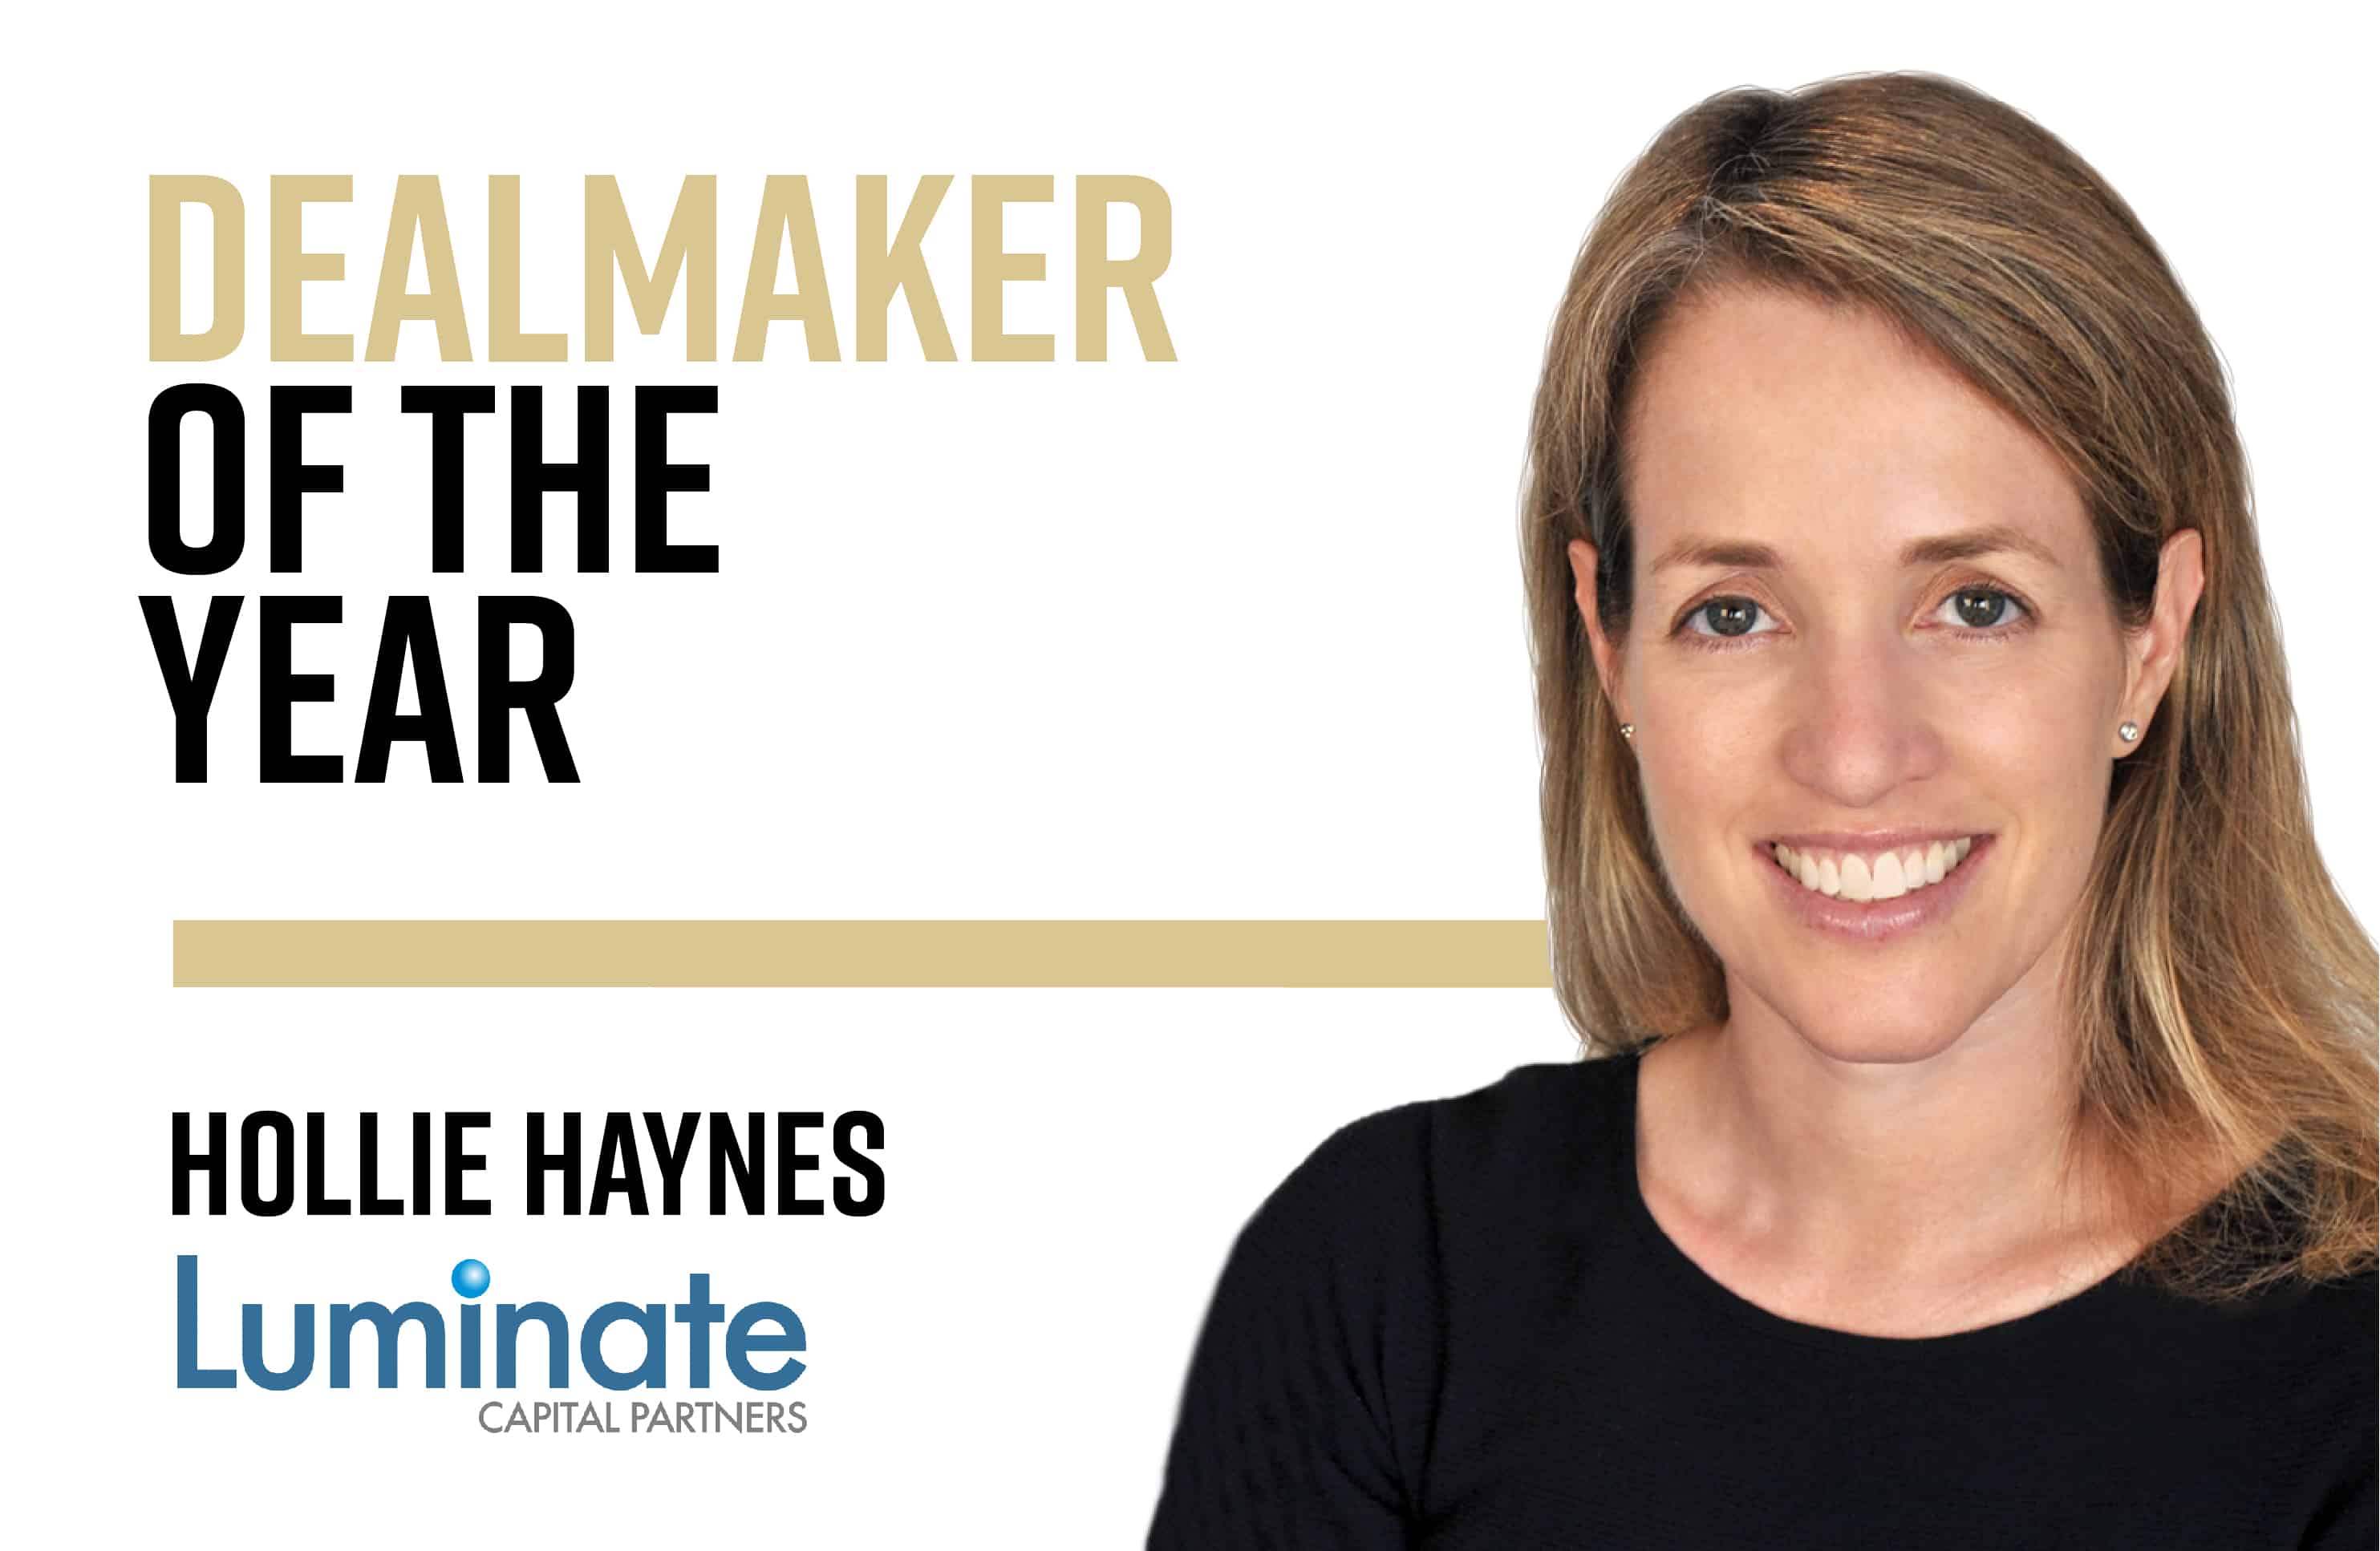 Dealmaker of the Year: Hollie Haynes, Luminate Capital Partners